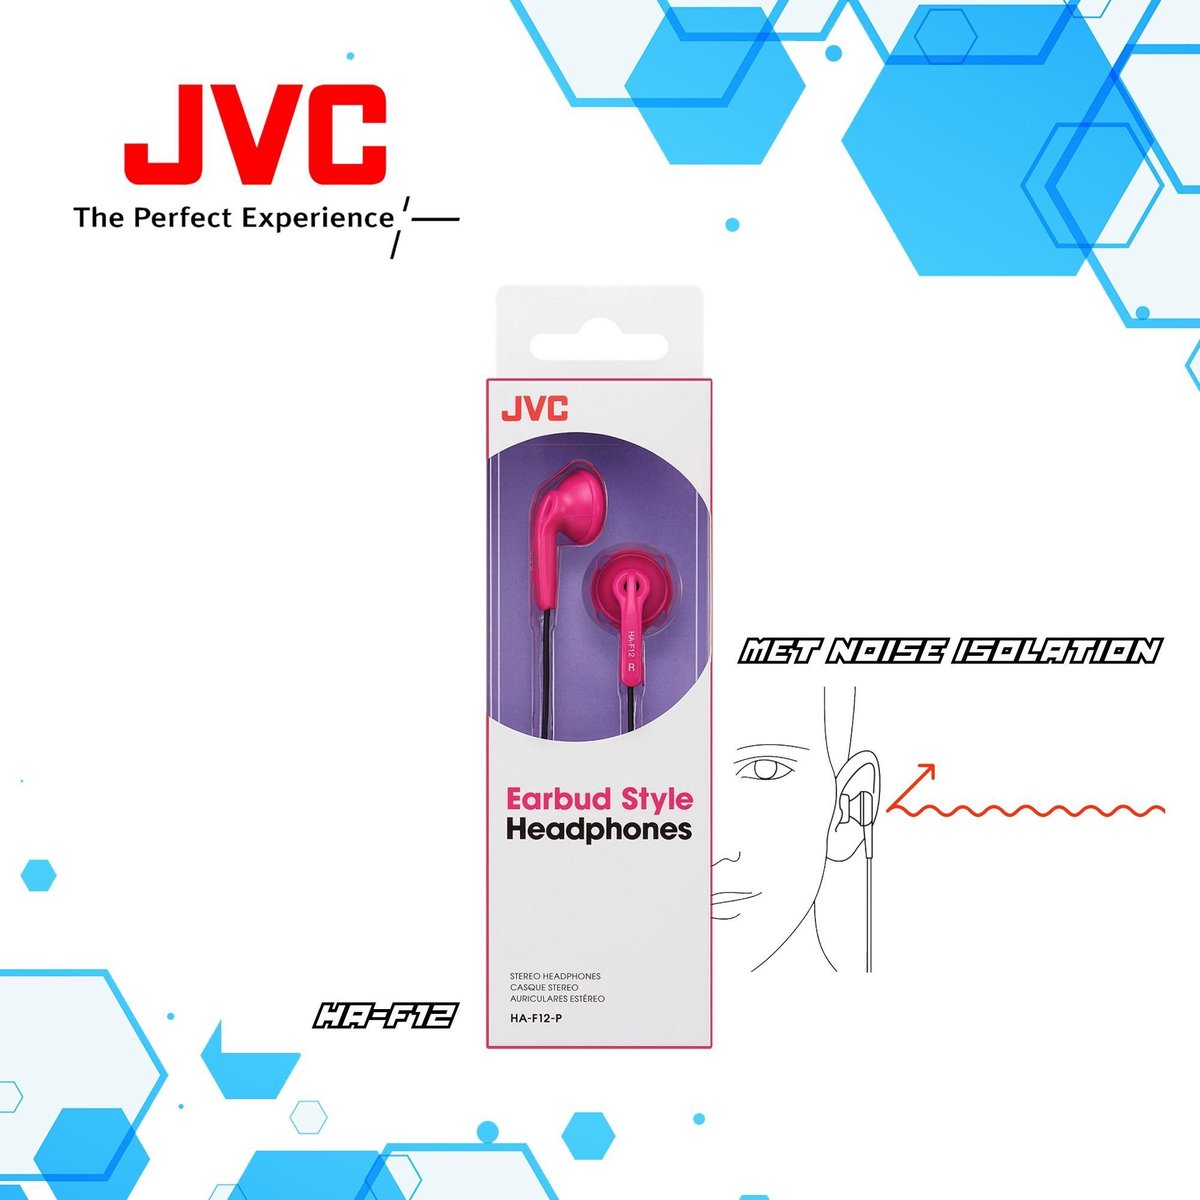 JVC Earbud Style In Earphone met Noise Isolation - Punch Pink